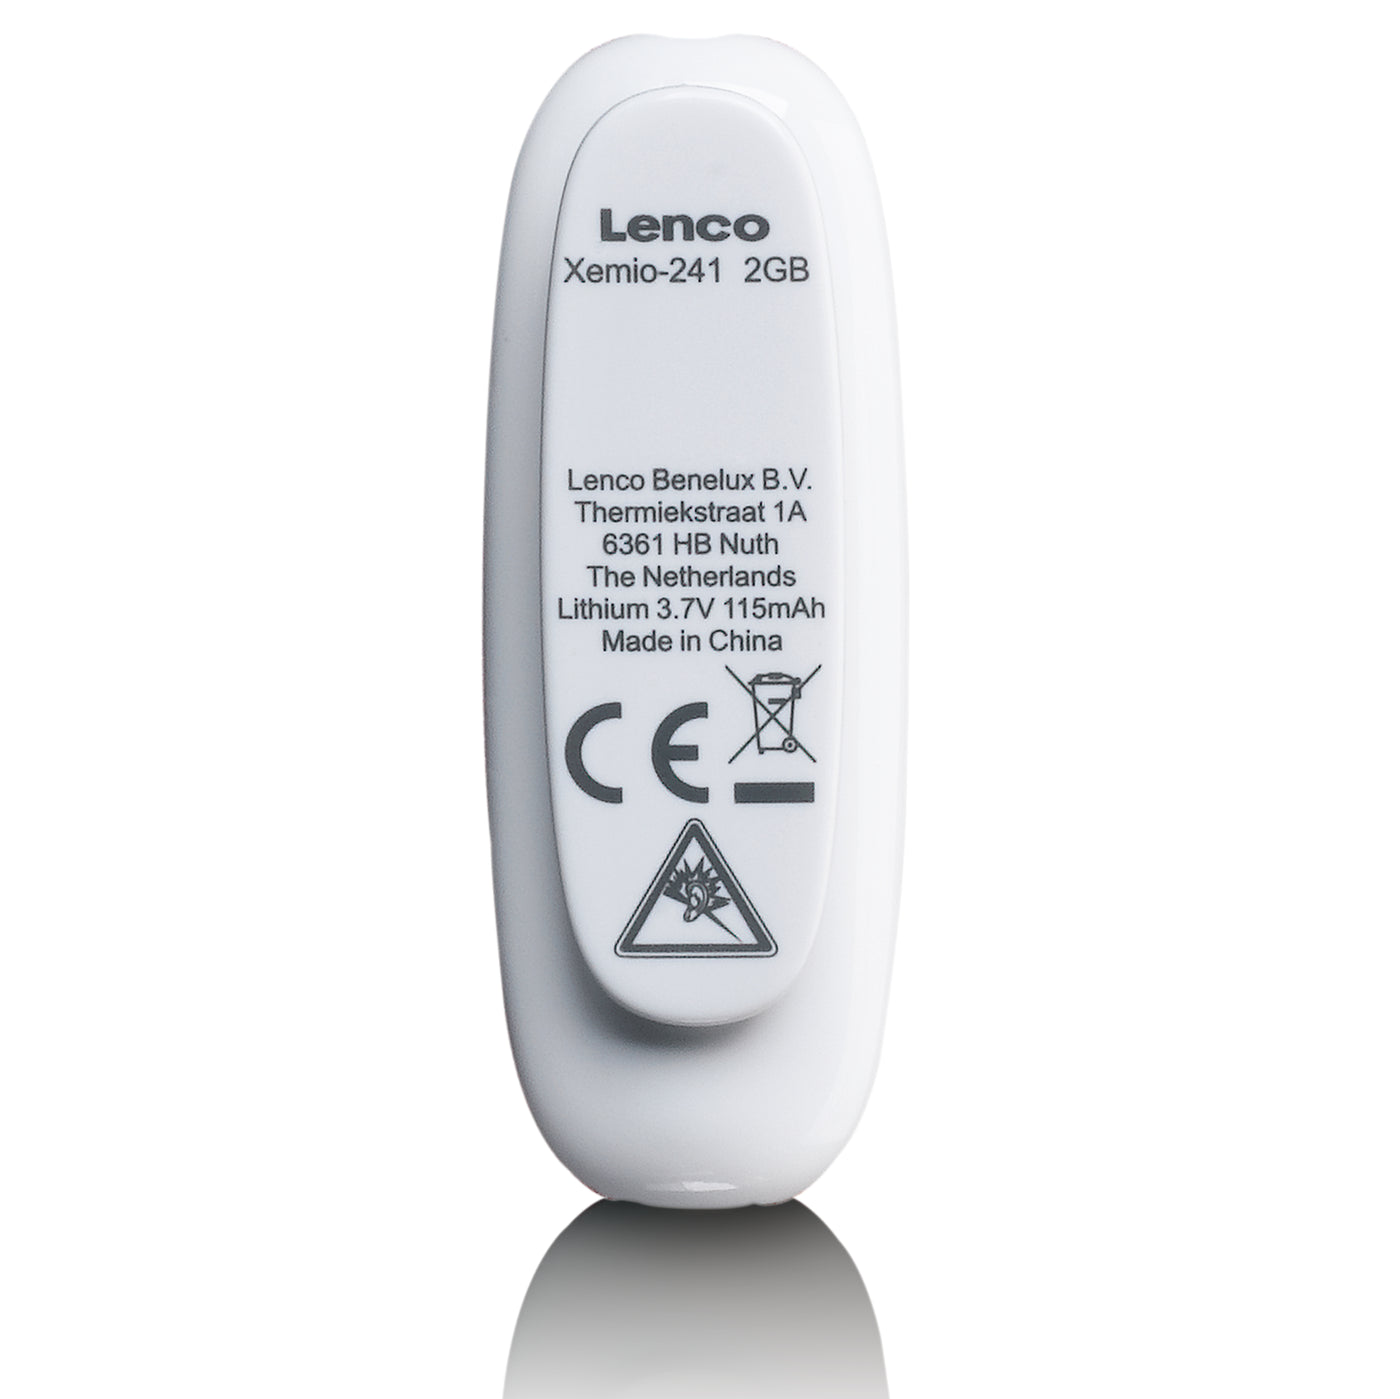 LENCO Xemio-241GY - Clip MP3 player with 2 GB memory - Grey